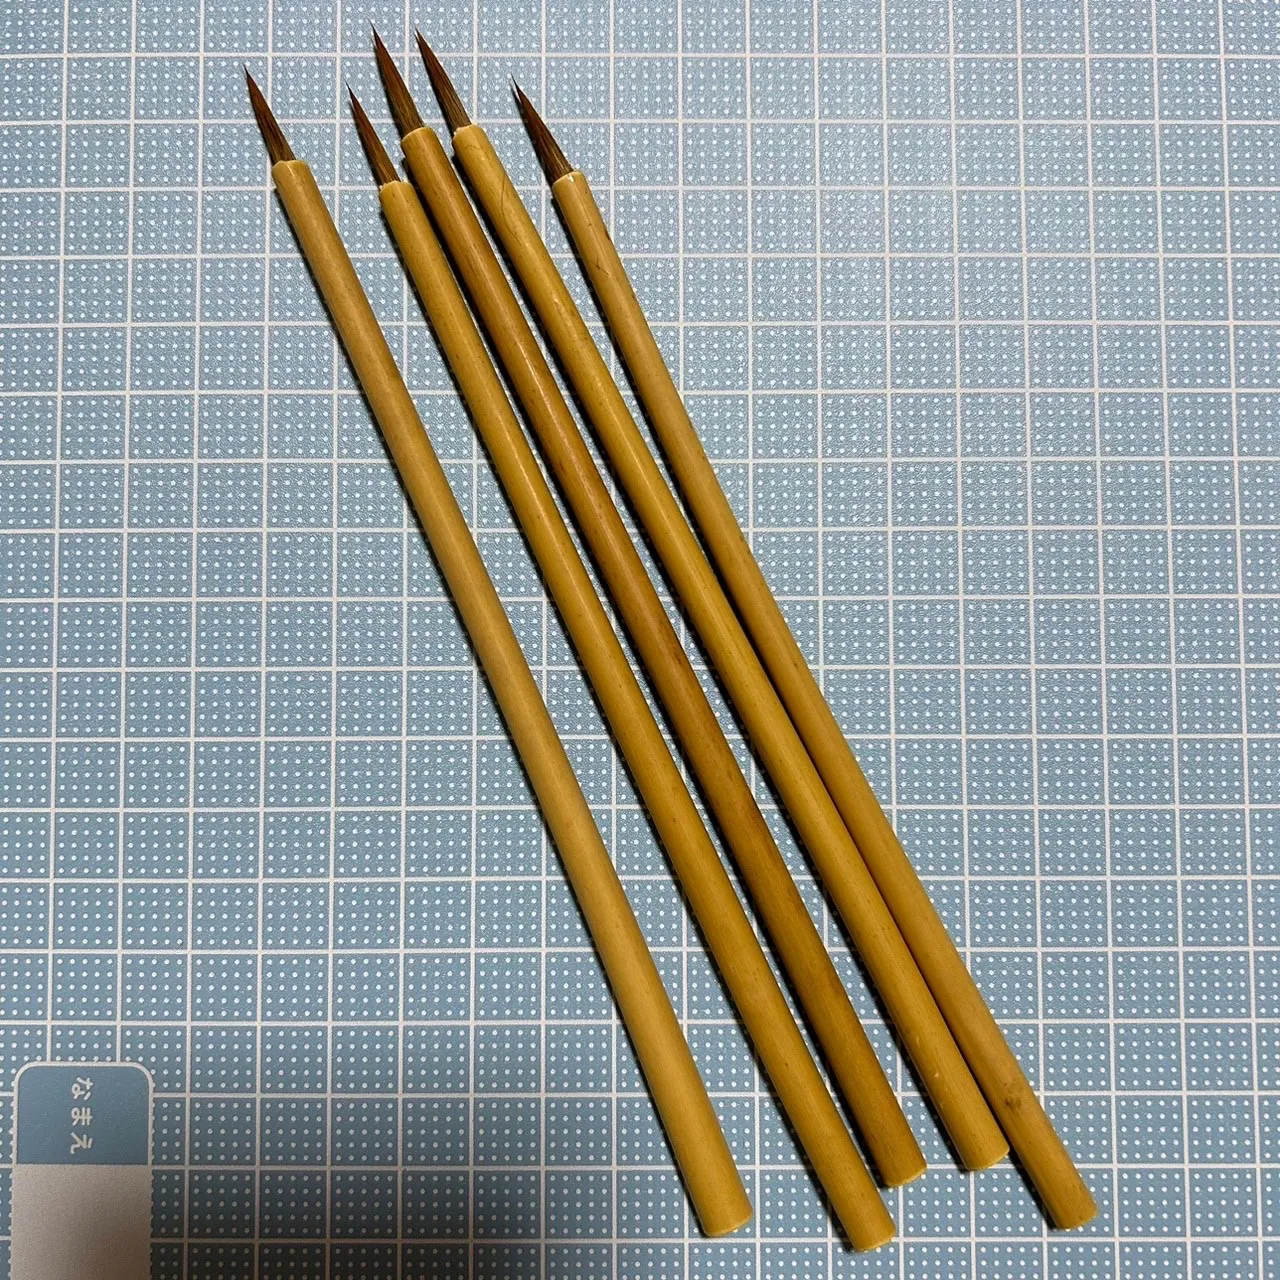 イタチ面相5本セット面相筆小筆習字写経日本画水彩画墨岩絵の具膠絵皿